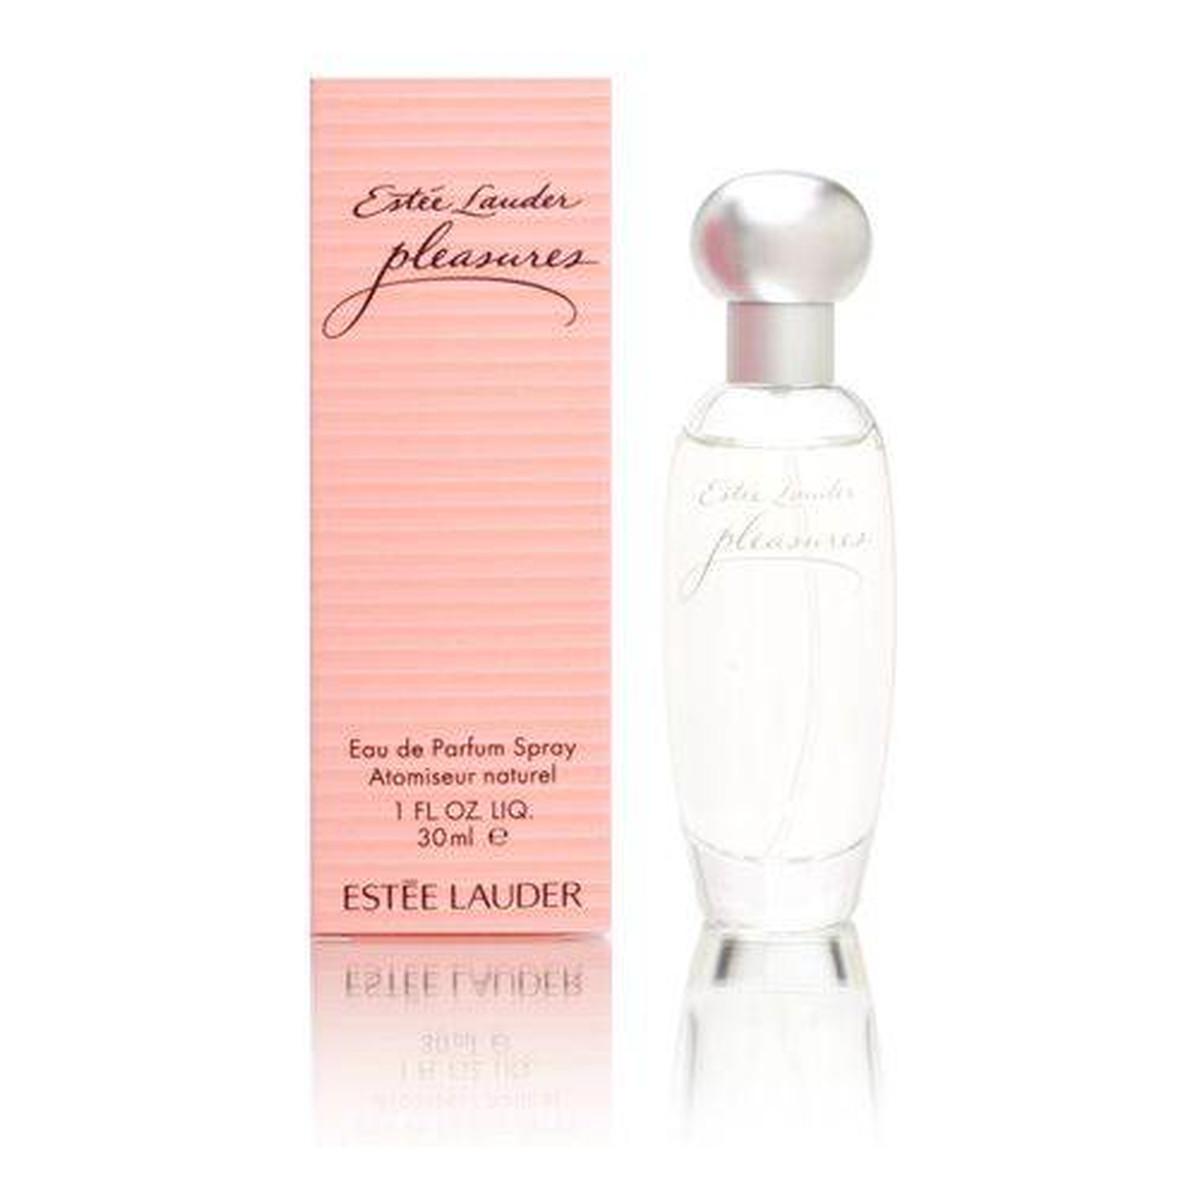 Estee Lauder Pleasures woda perfumowana dla kobiet 30ml